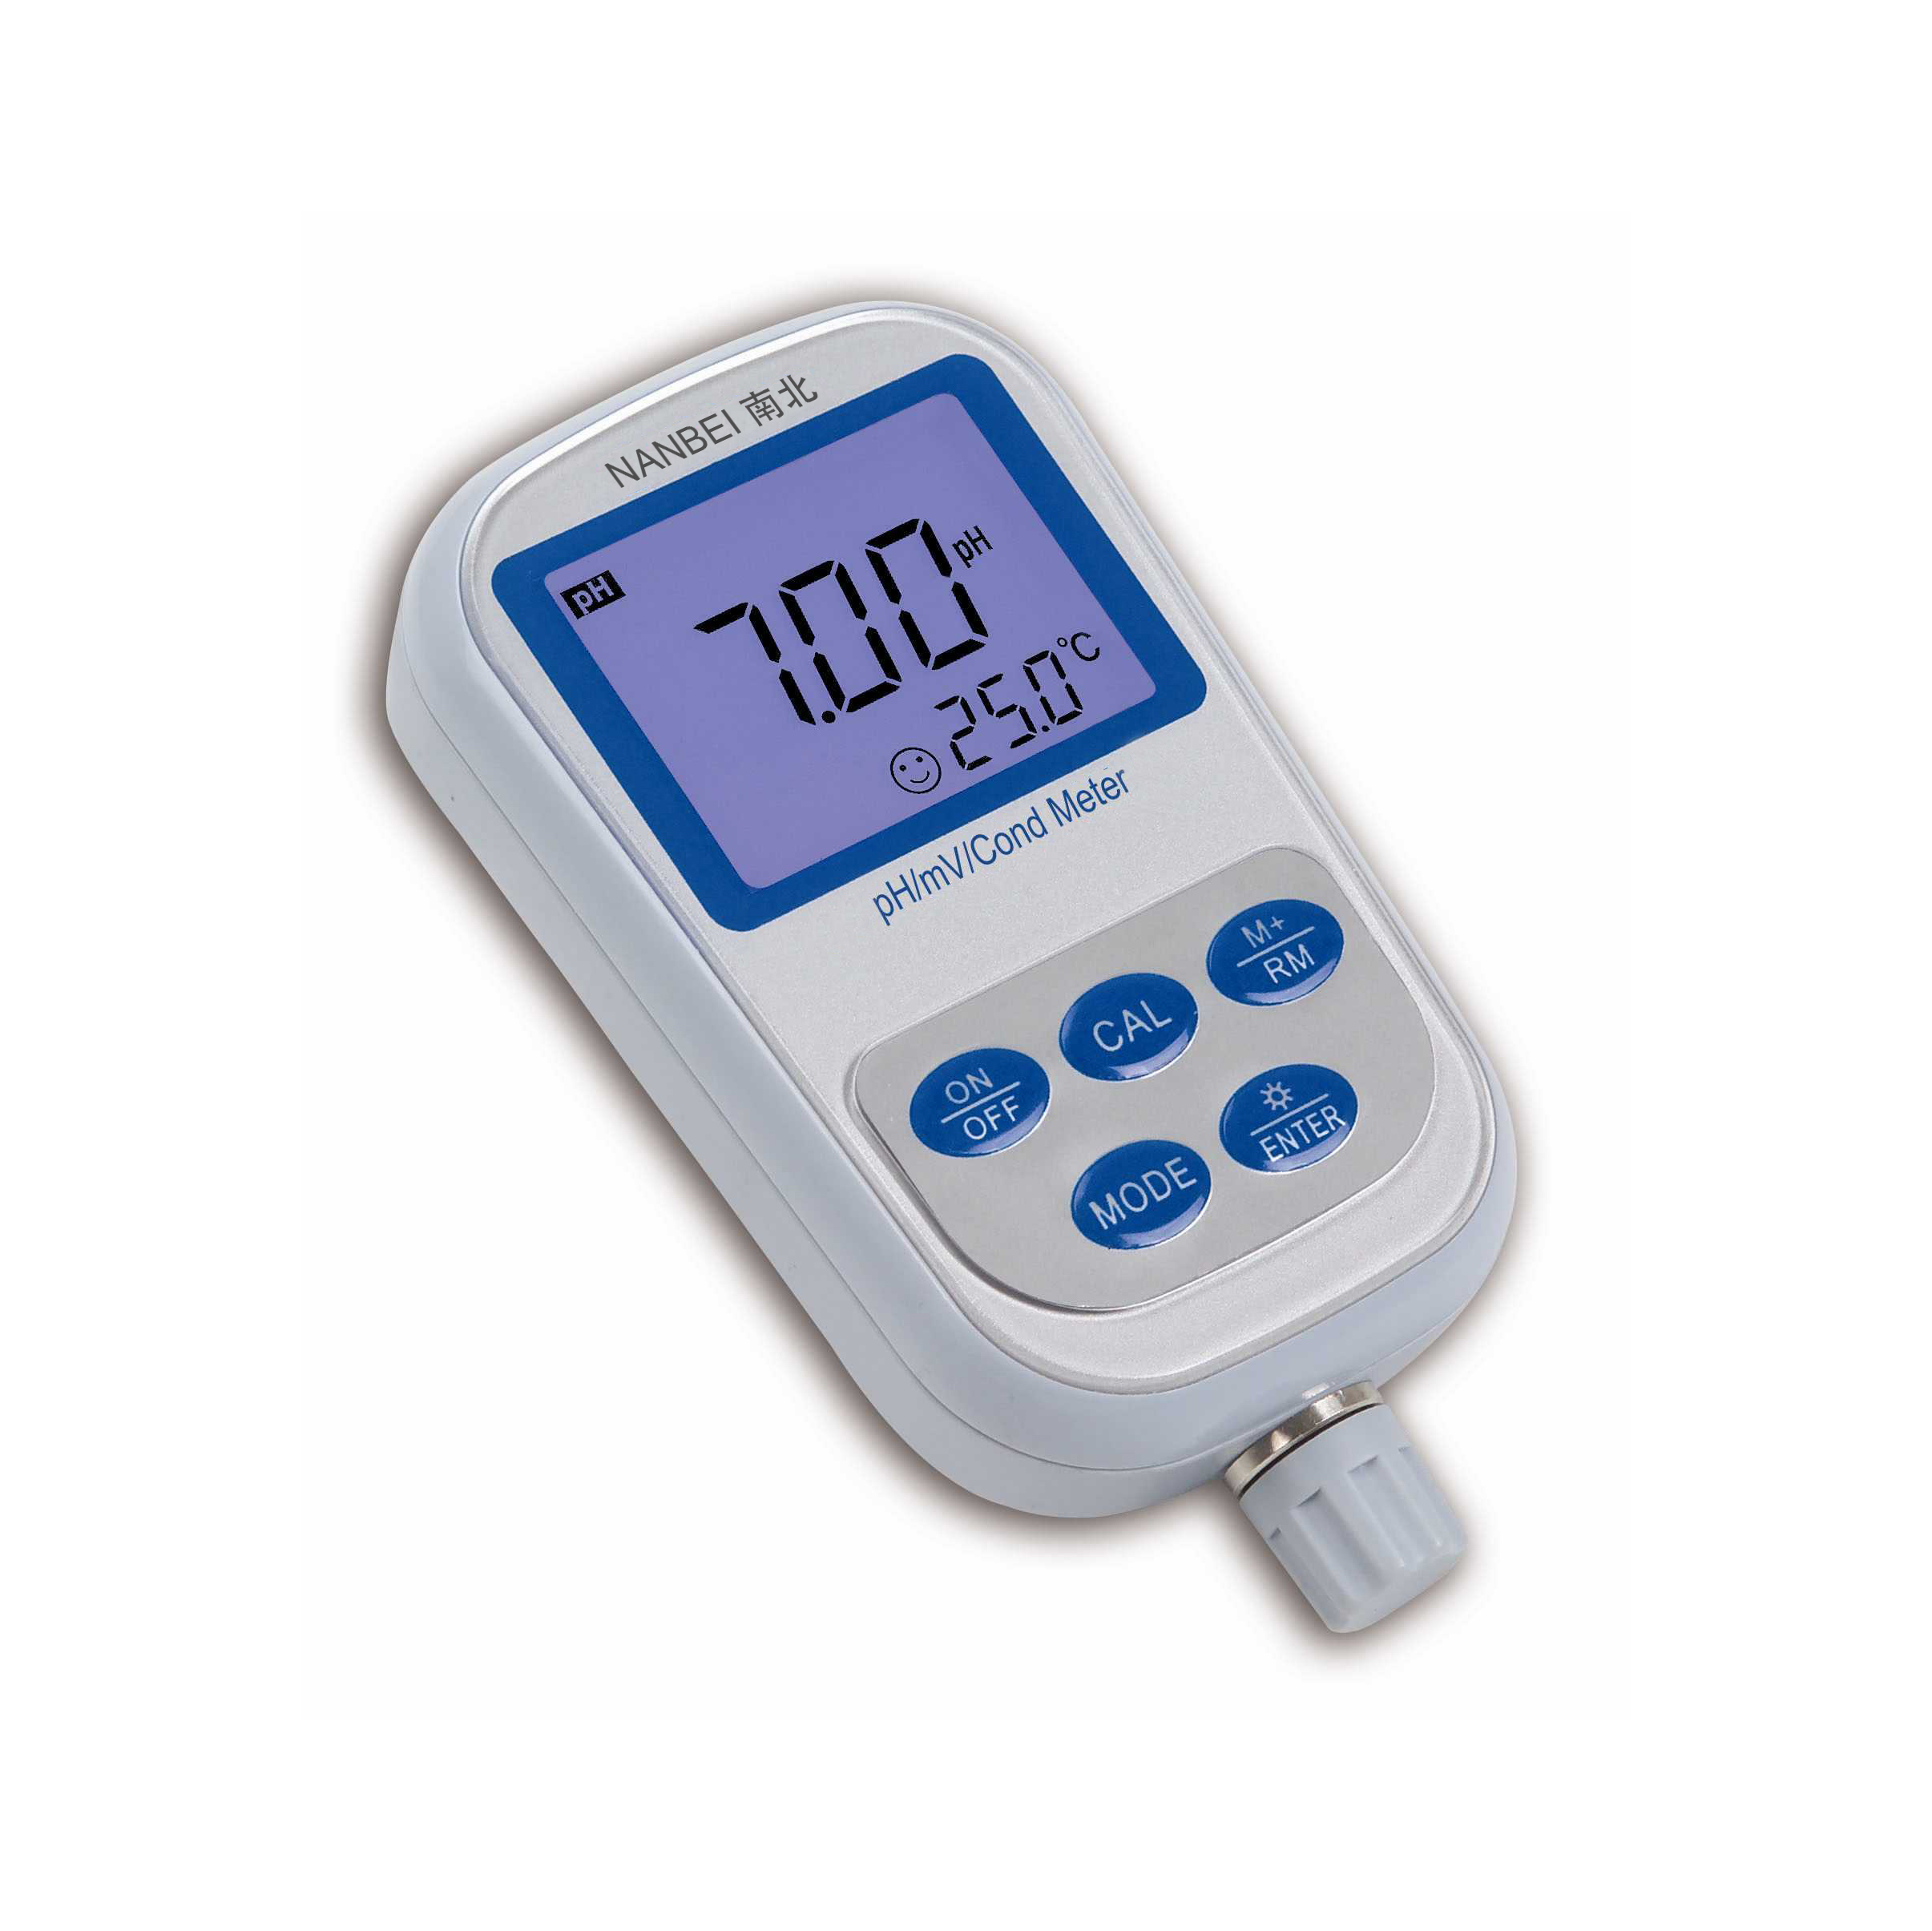 SX711 portable pH meter